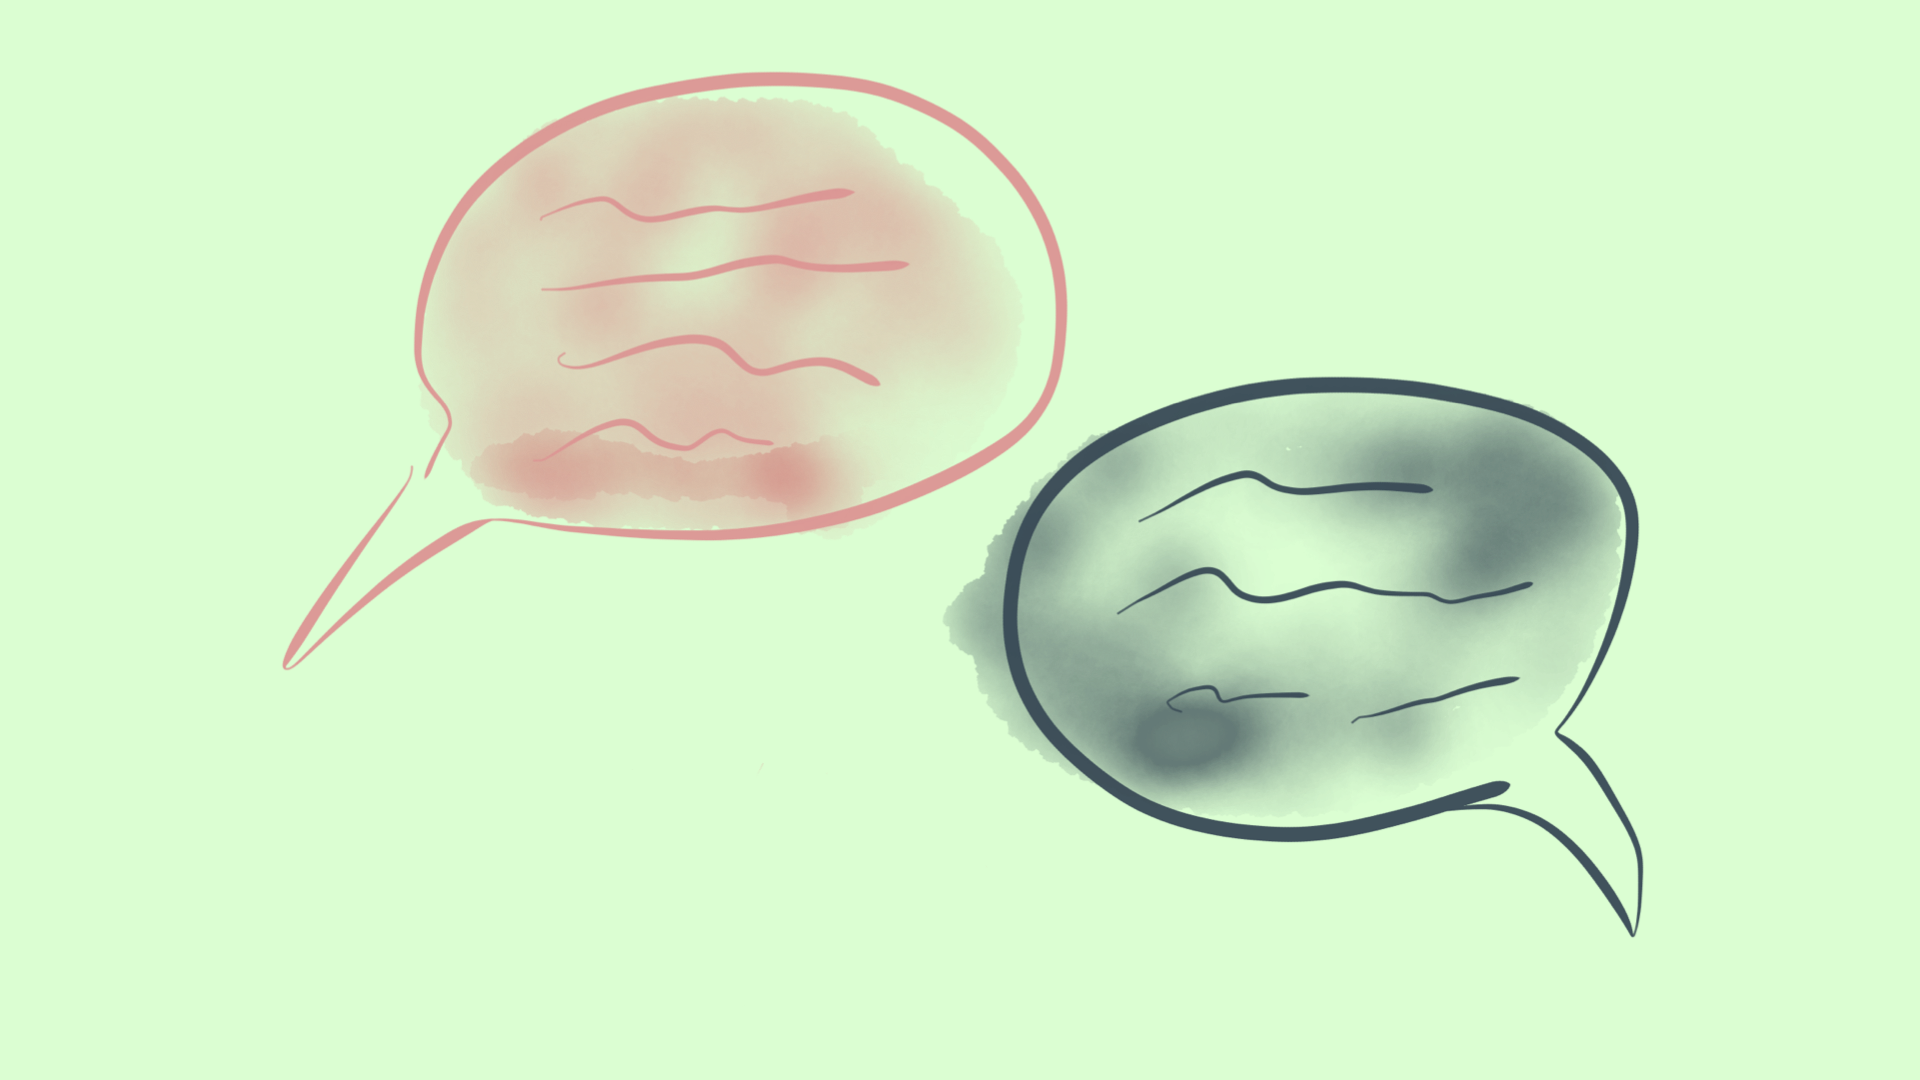 Abstract illustration of speech bubbles.